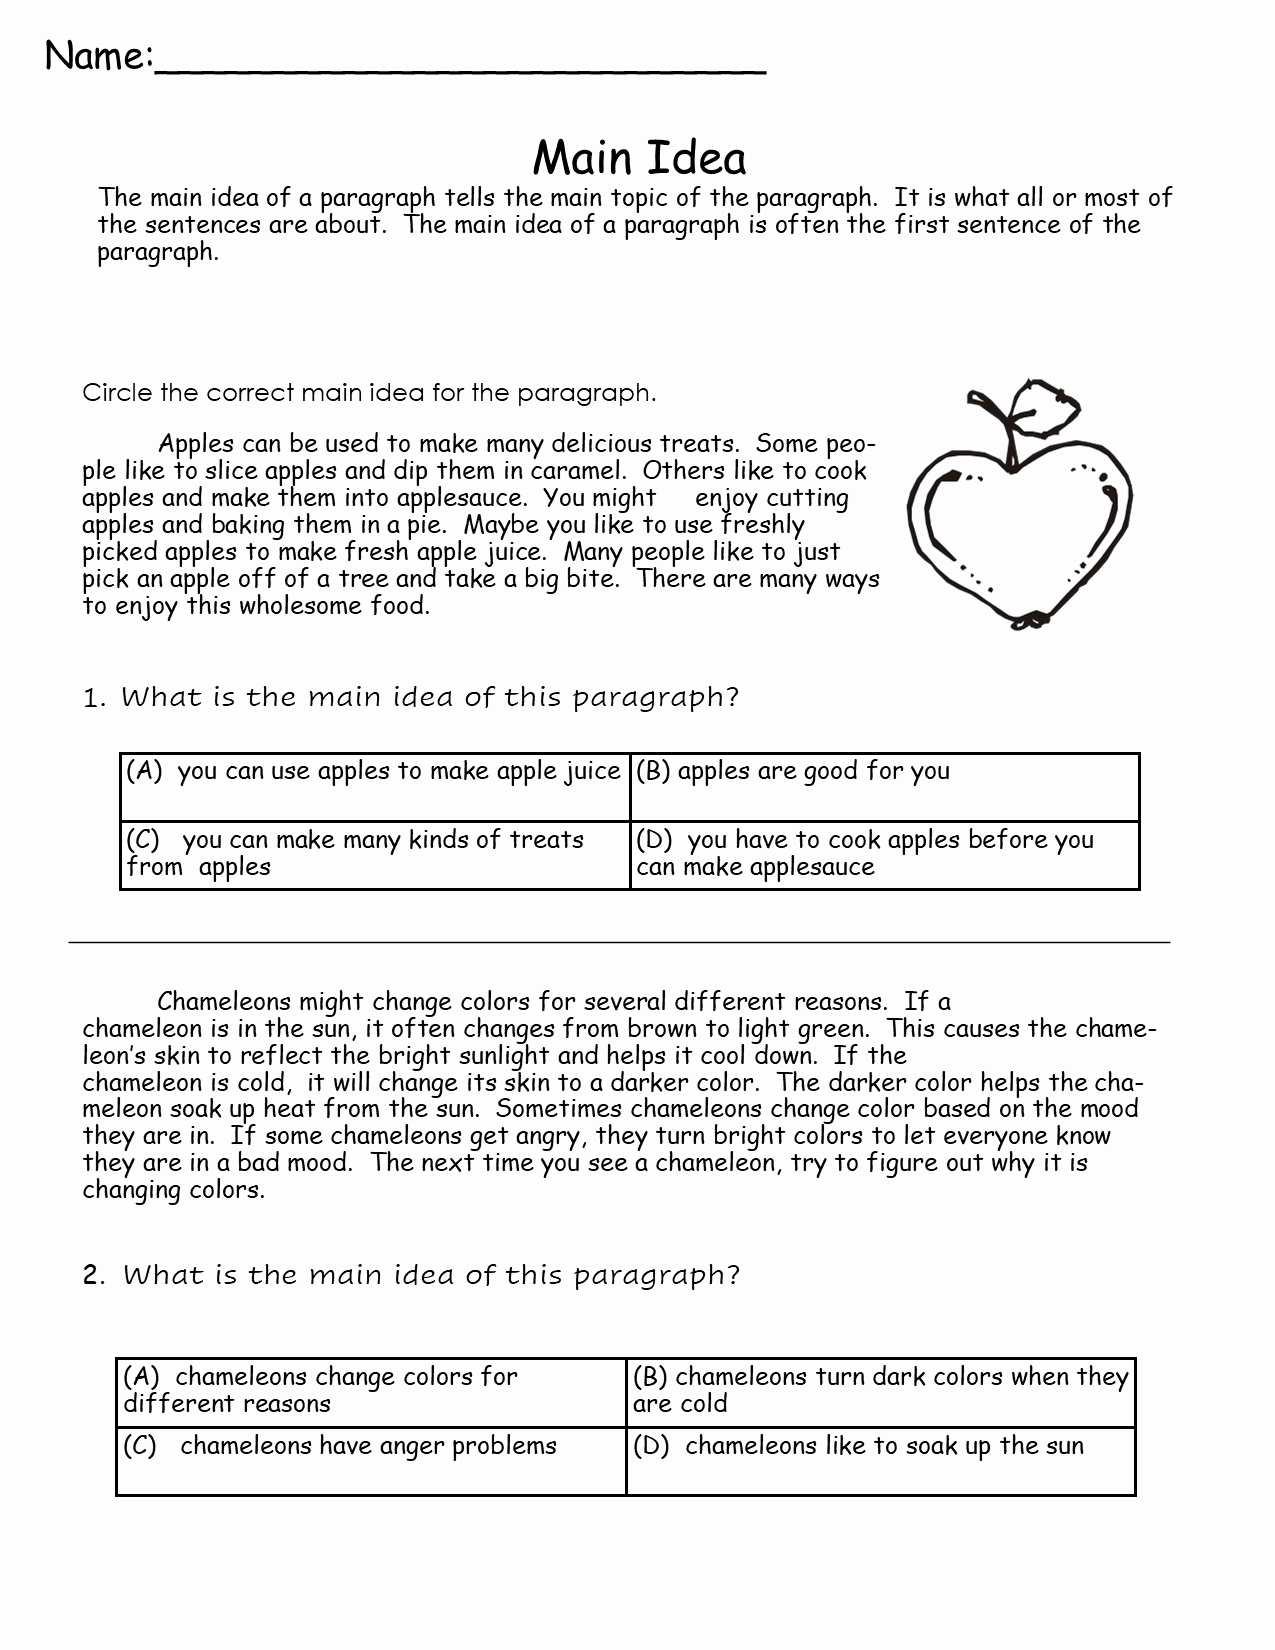 Free Printable Main Idea Worksheets Beautiful Main Idea Worksheets From the Teacher S Guide